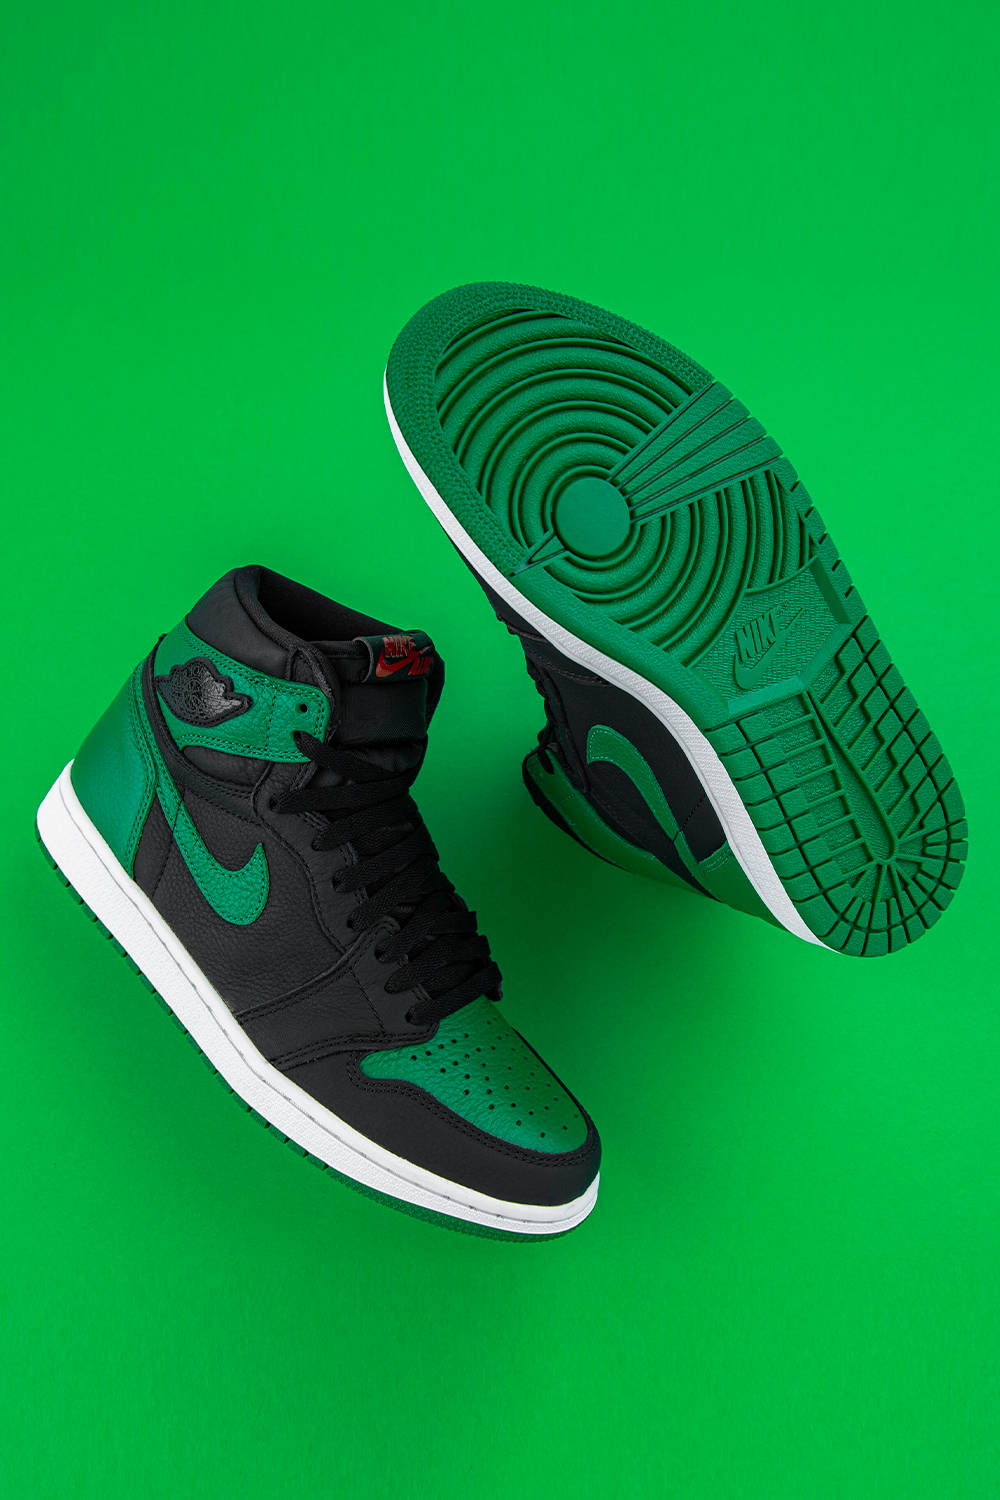 Air Jordan 1 Retro Og Green And Black Wallpaper